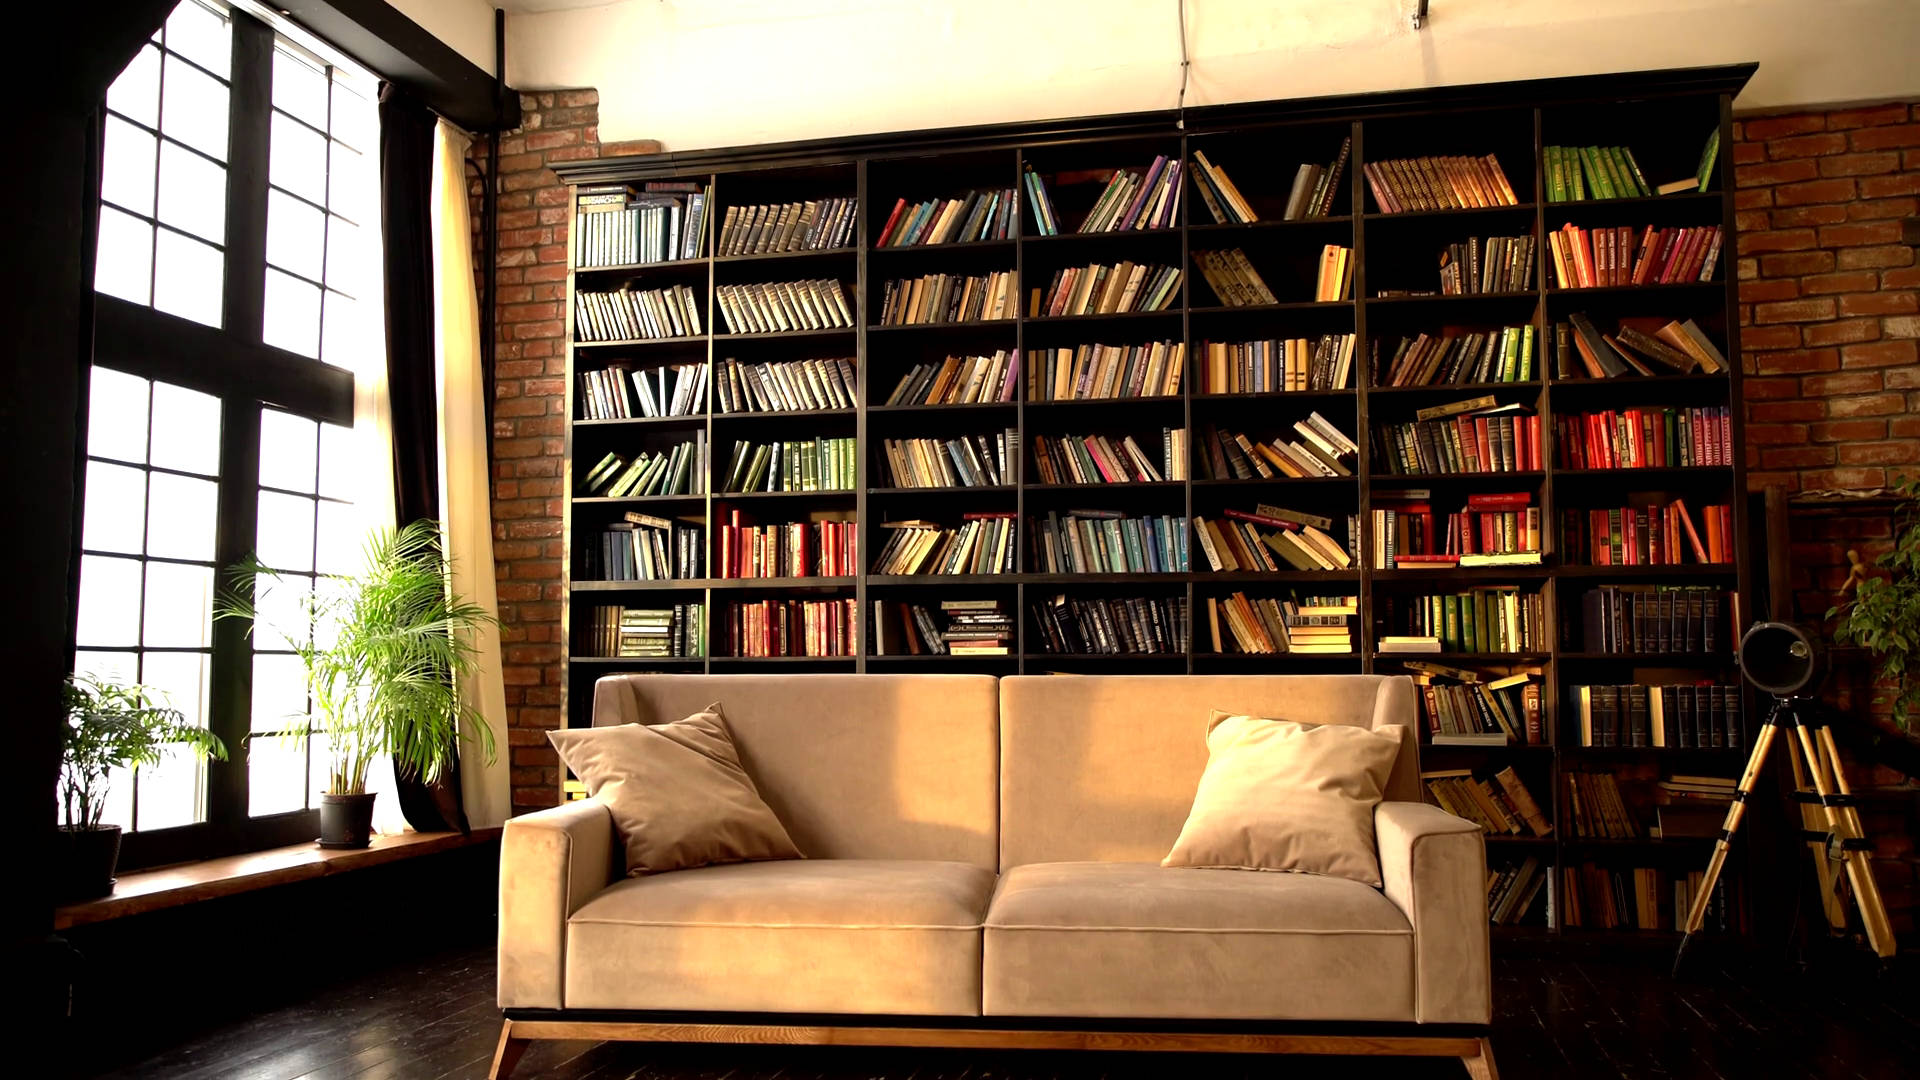 Living Room With Big Bookshelf